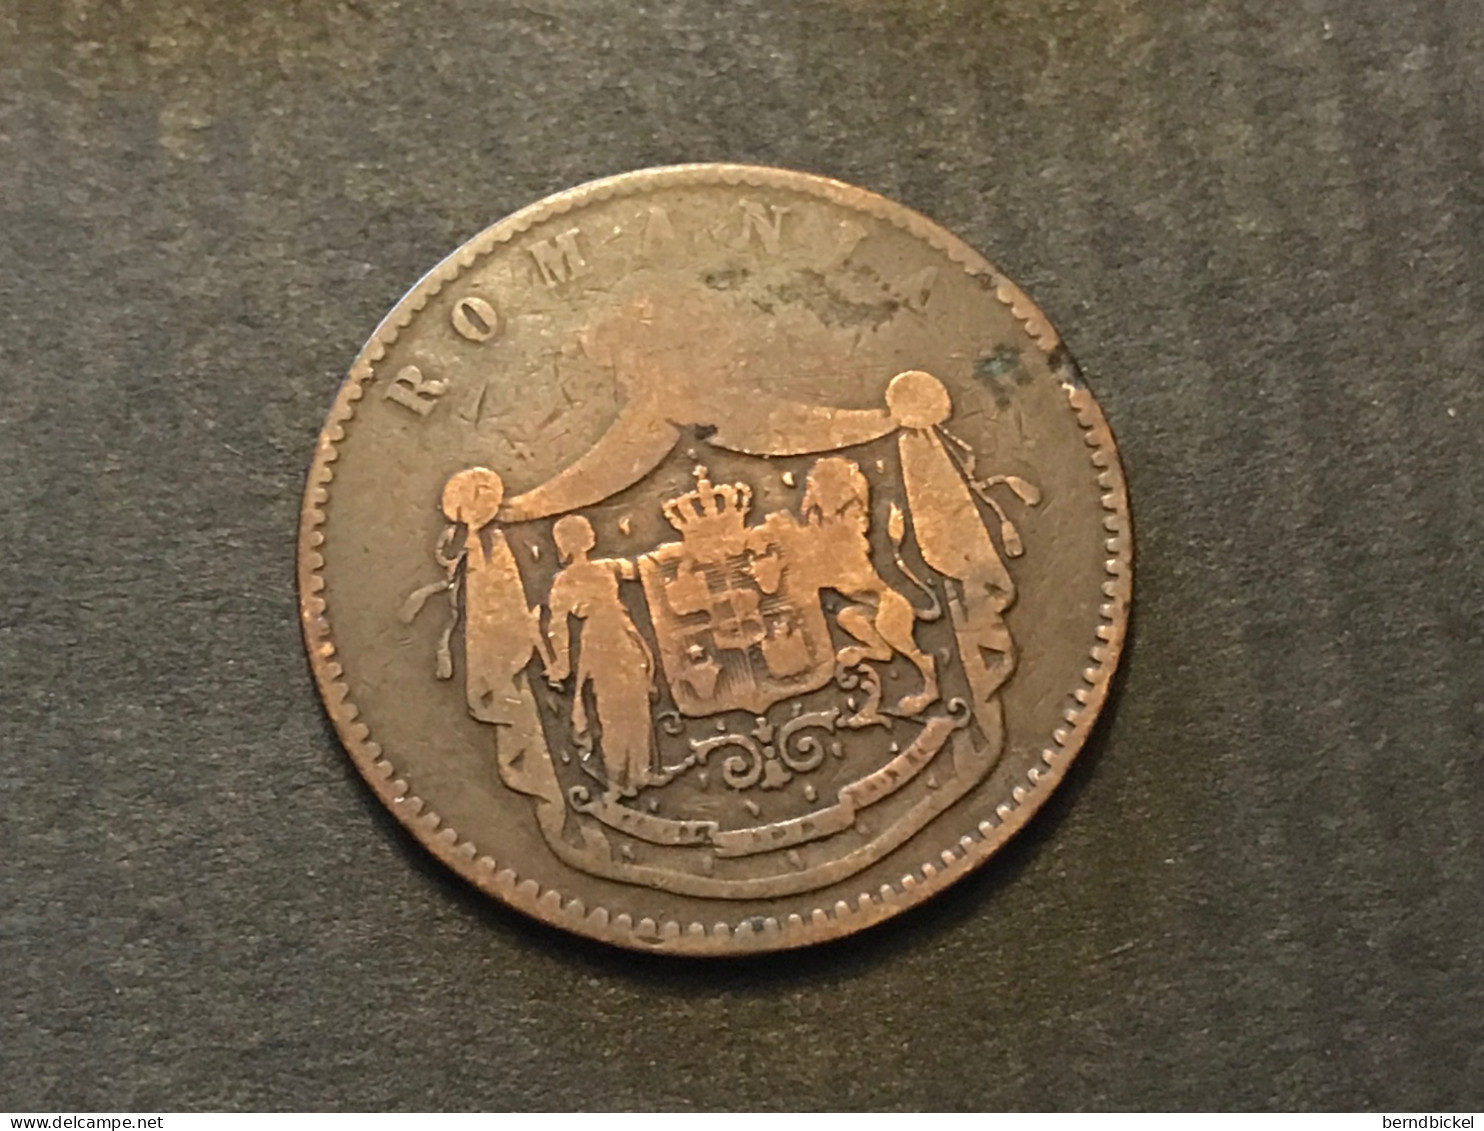 Münze Münzen Umlaufmünze Rumänien 10 Bani 1867 "Watt" - Romania